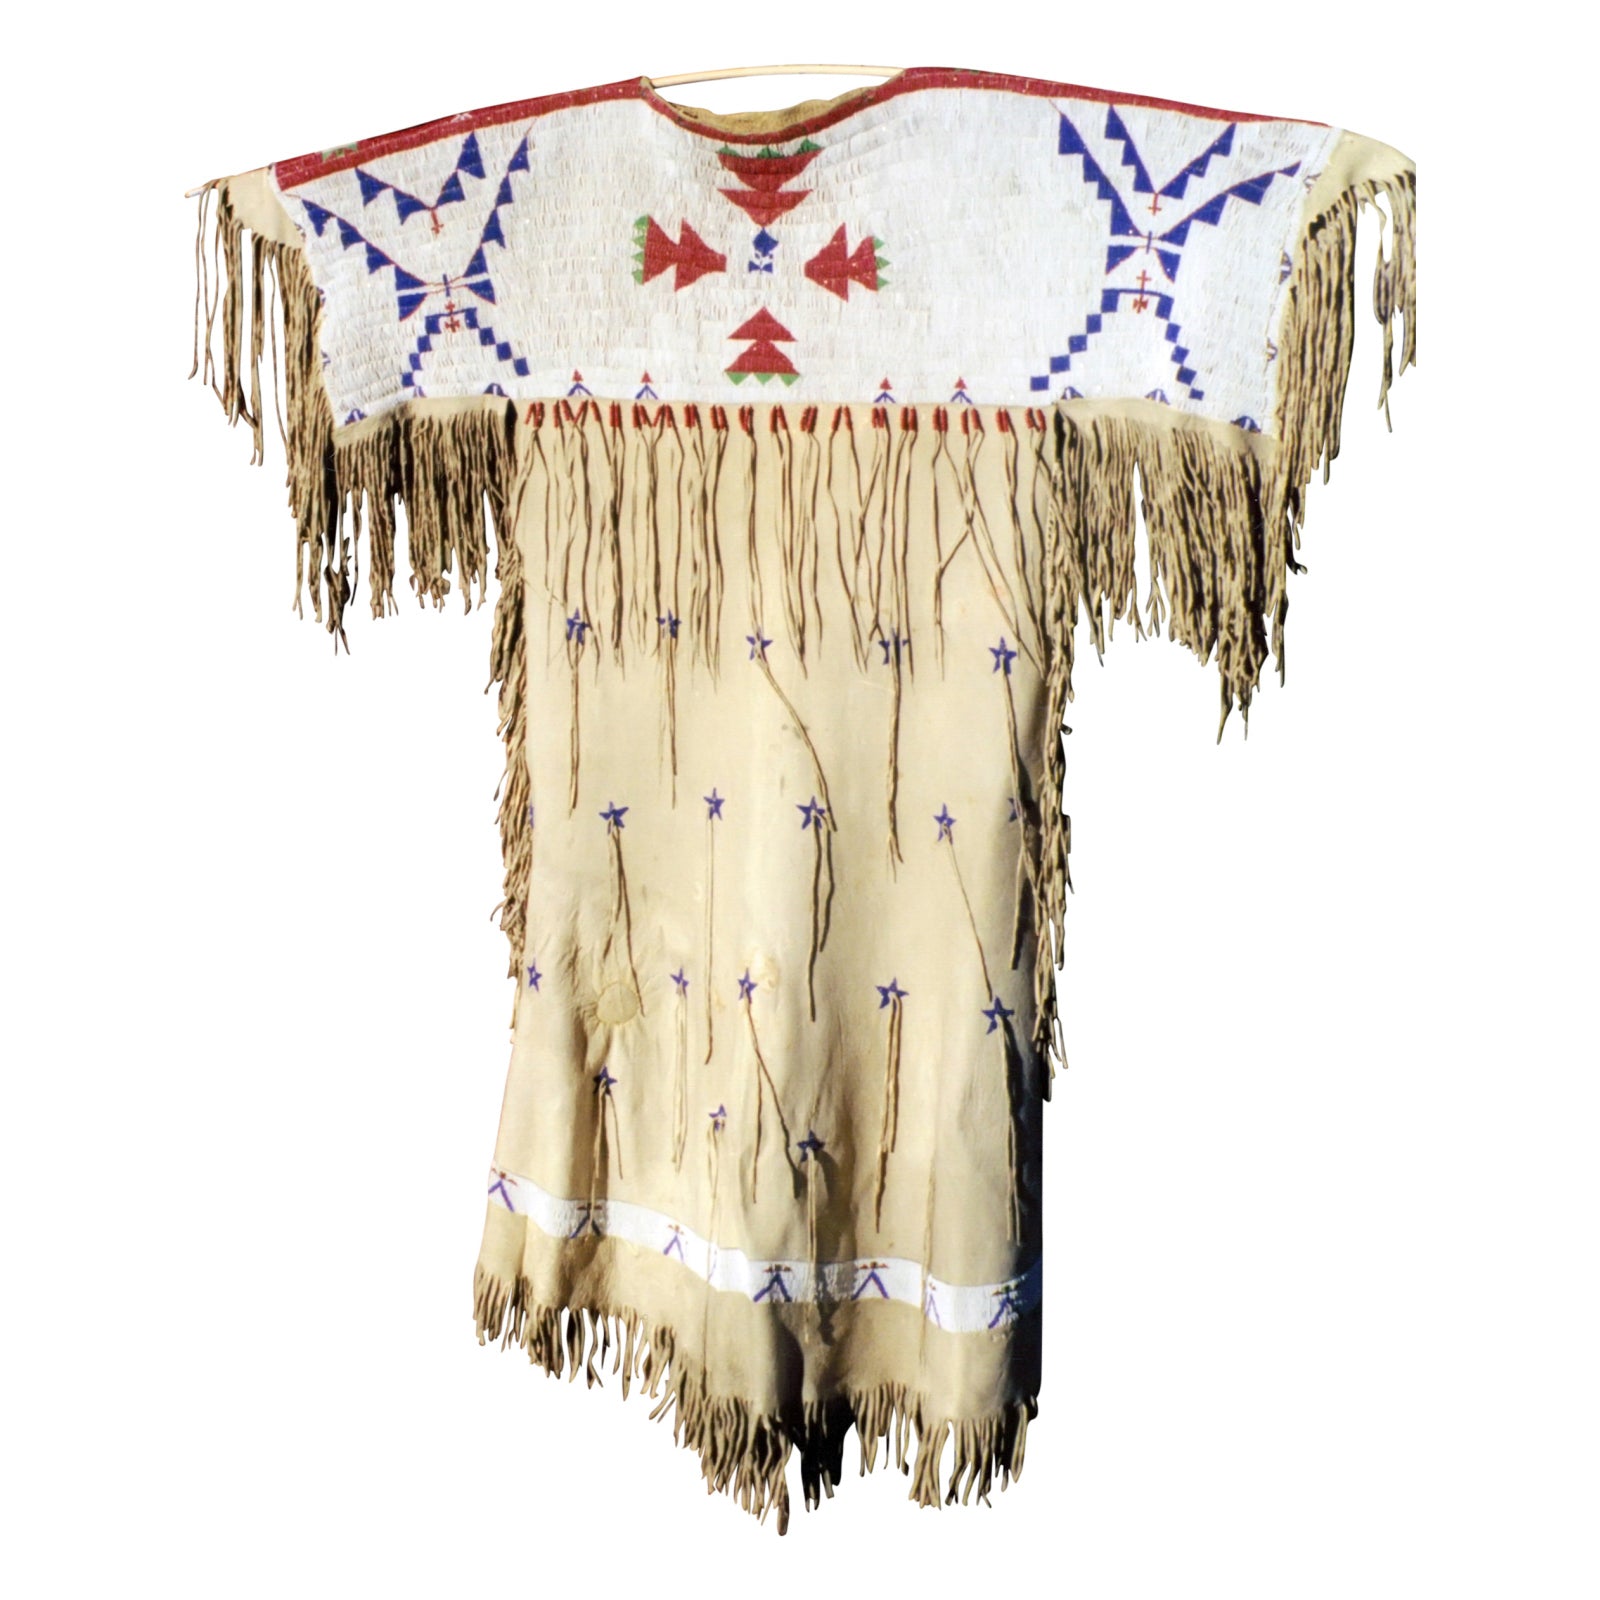 Arapaho/Sioux dress, Native, Garment, Dress